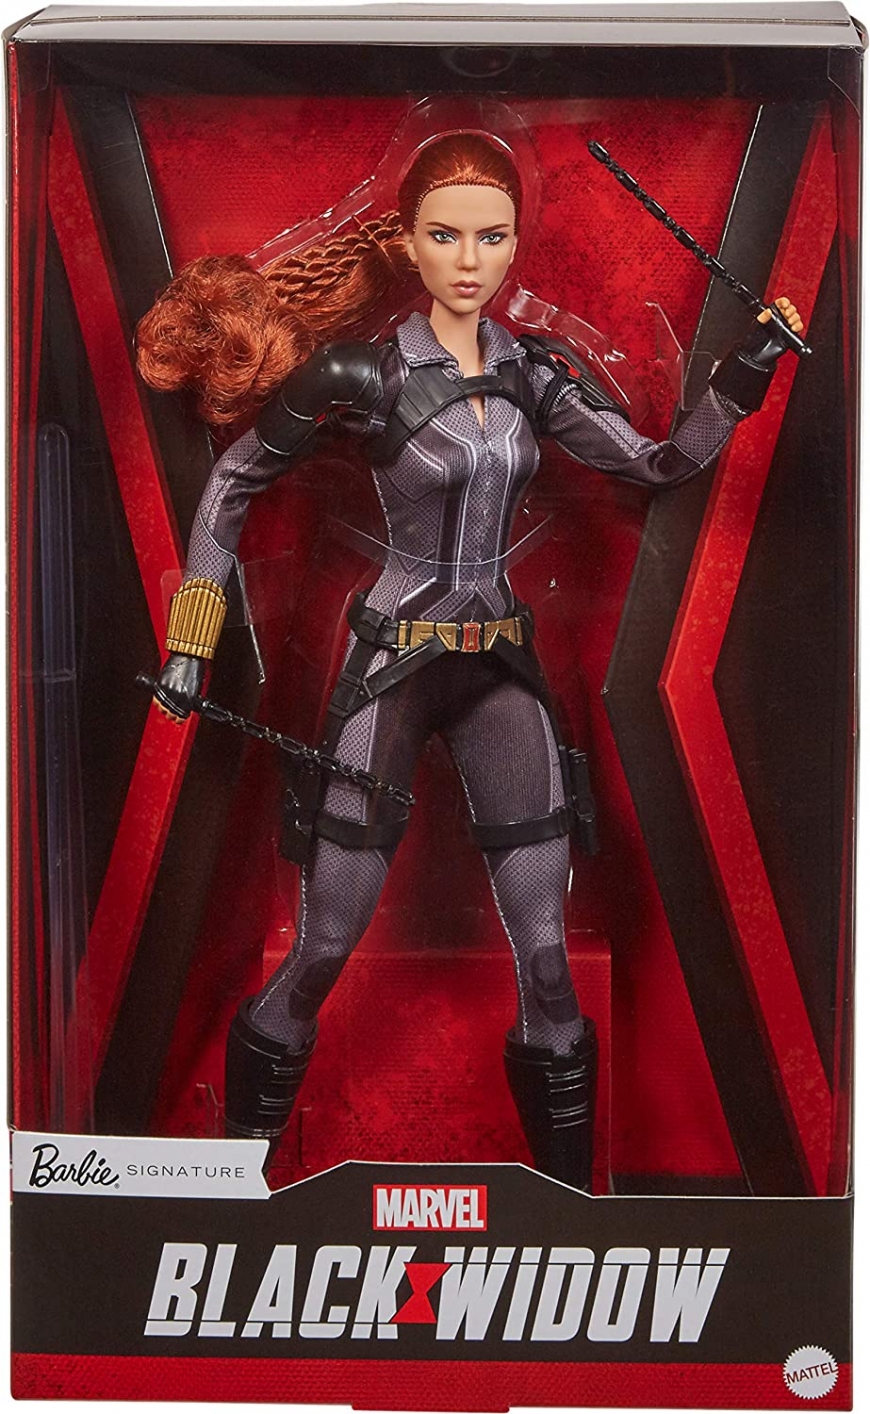 Collector Barbie Black Widow Doll 2020 in black suit